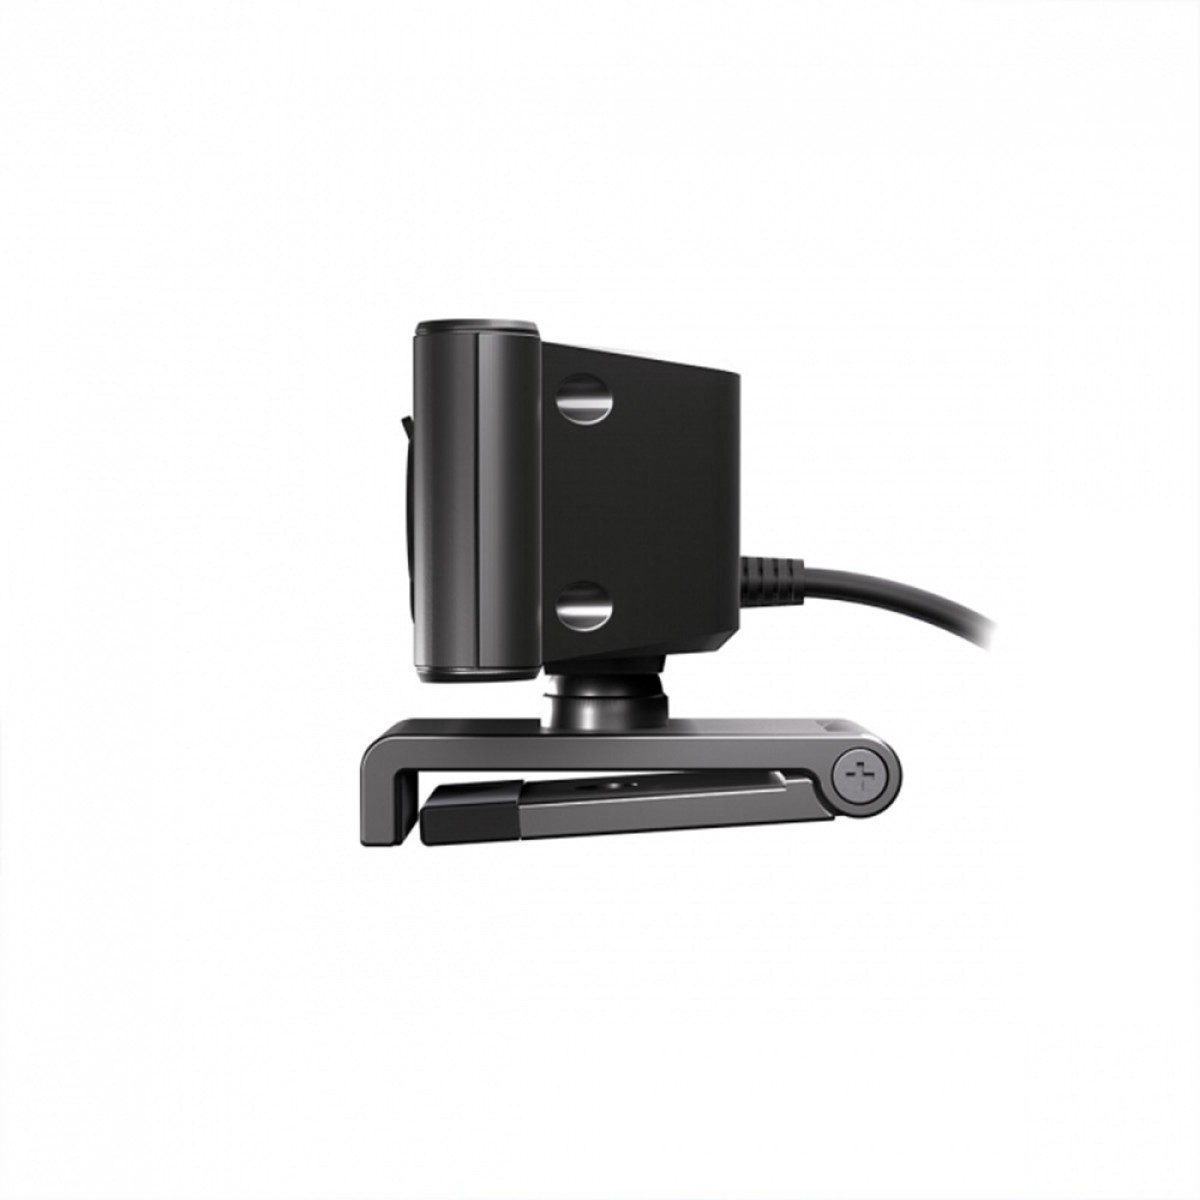 Webcam PCYES Raza Auto Focus, Full HD 1080p, USB, FHD-03